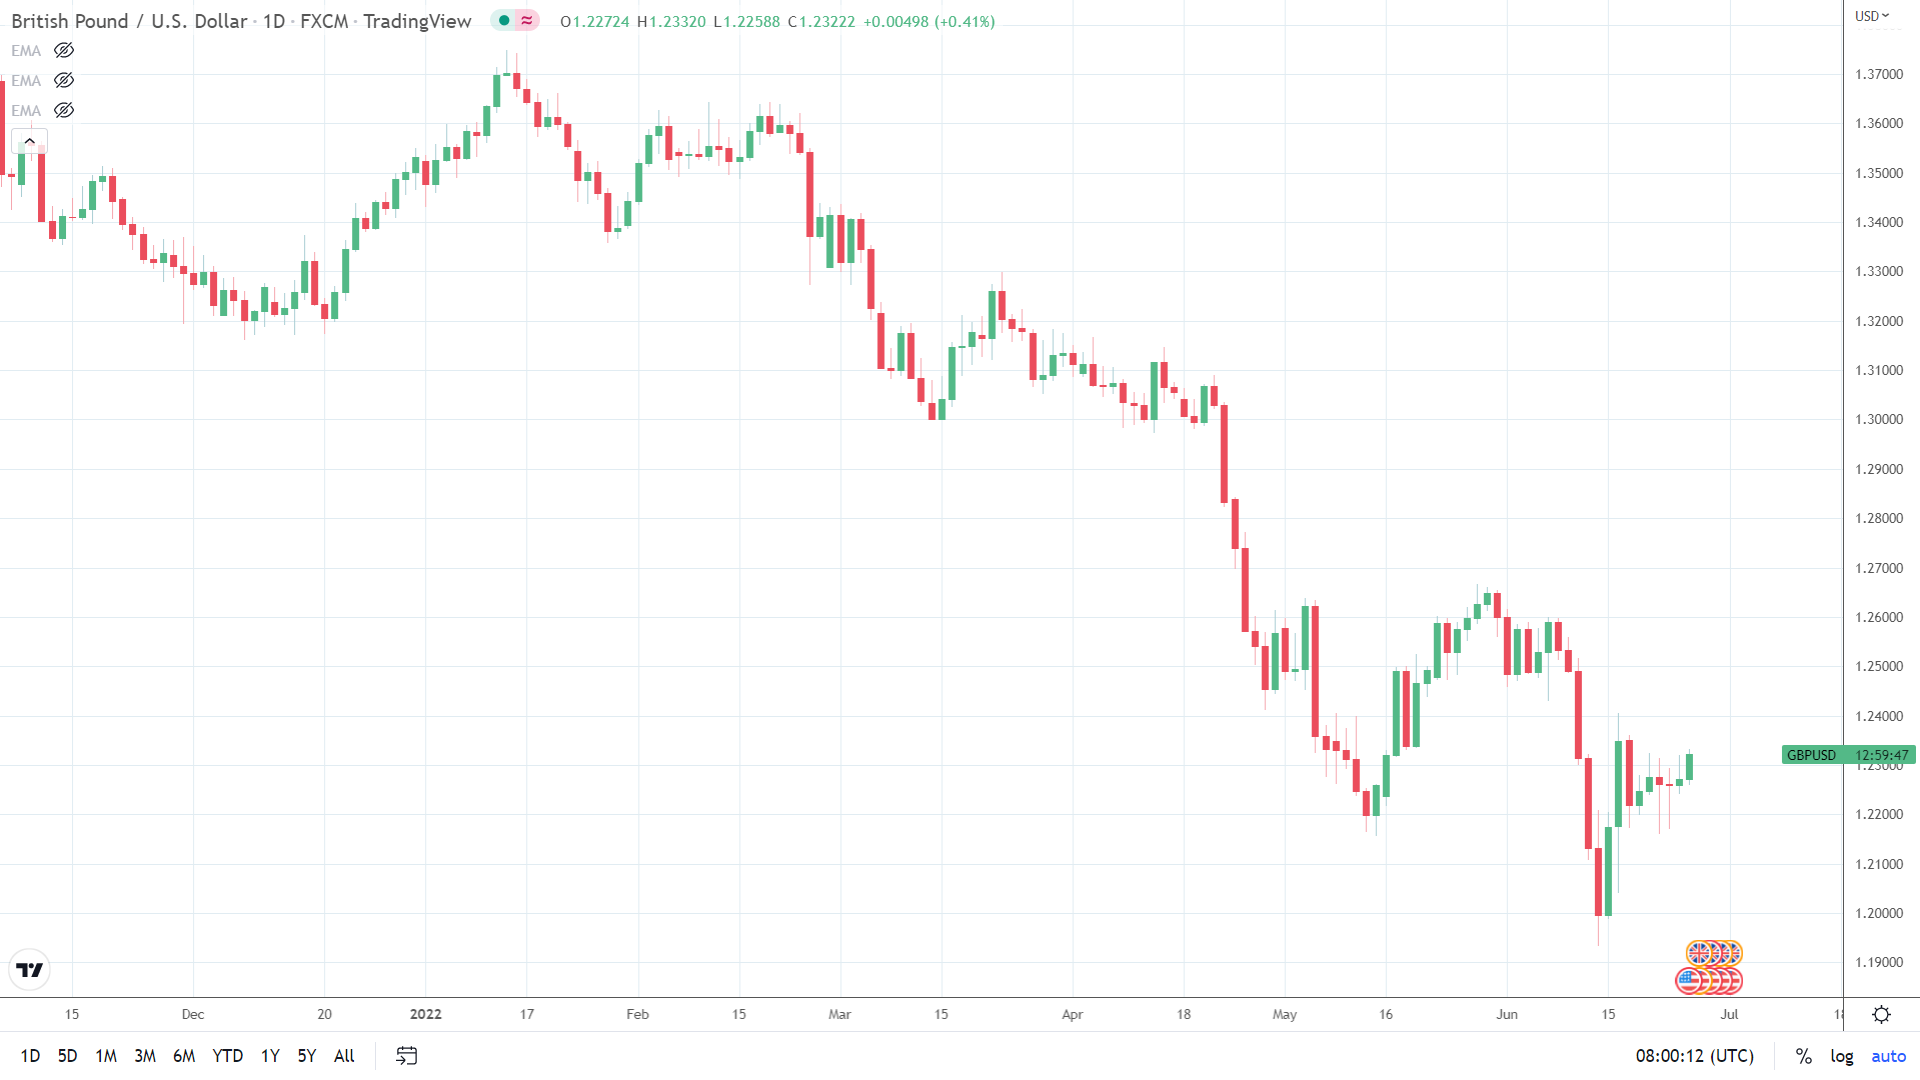 GBP/USD sees a bullish start.